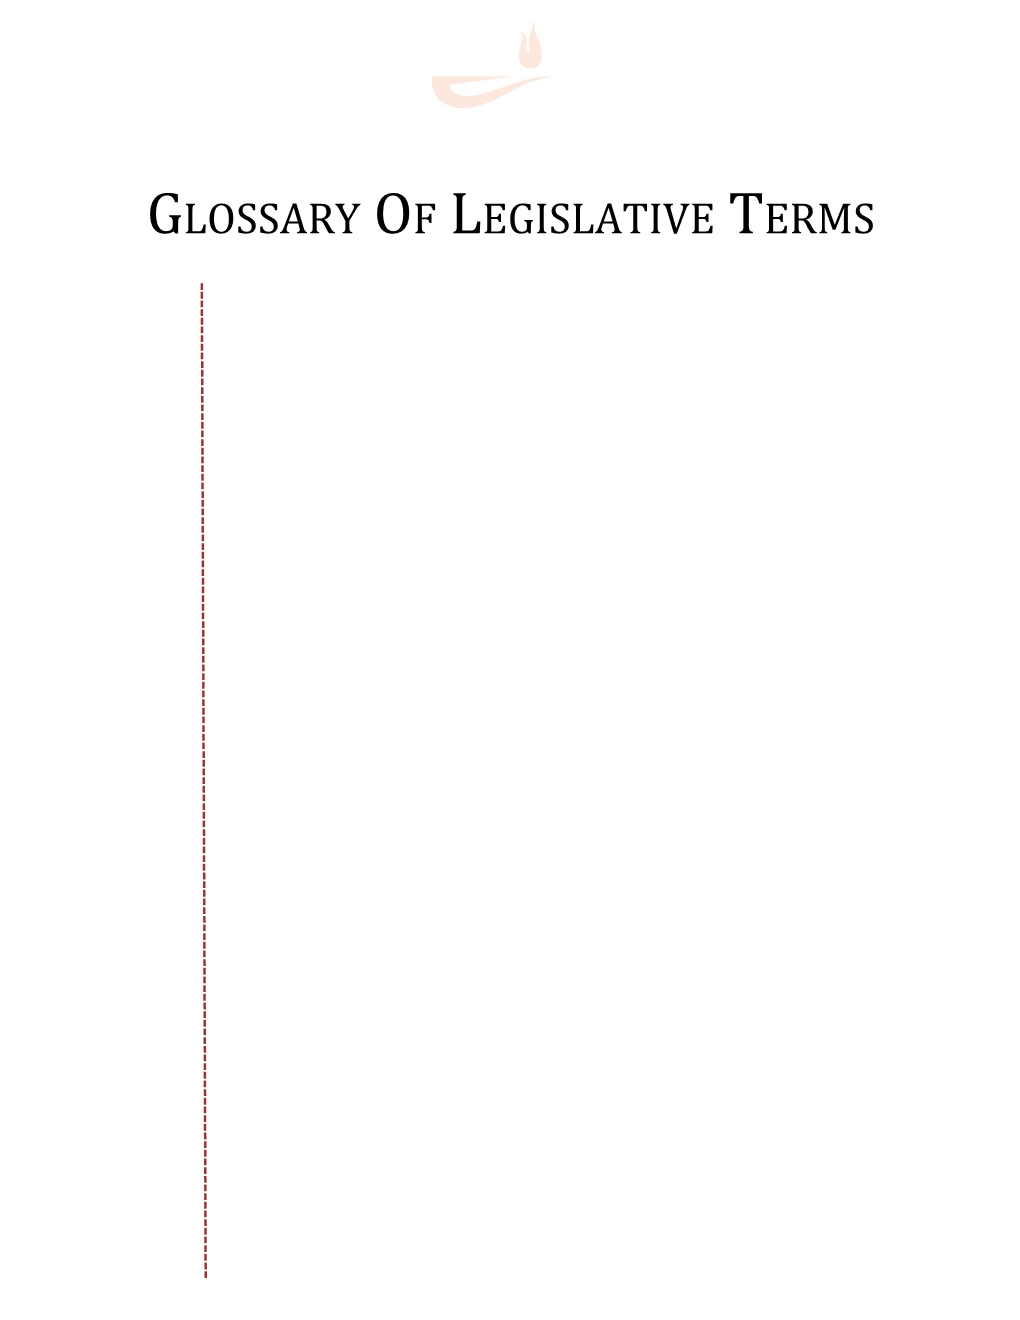 Glossary of Legislative Terms